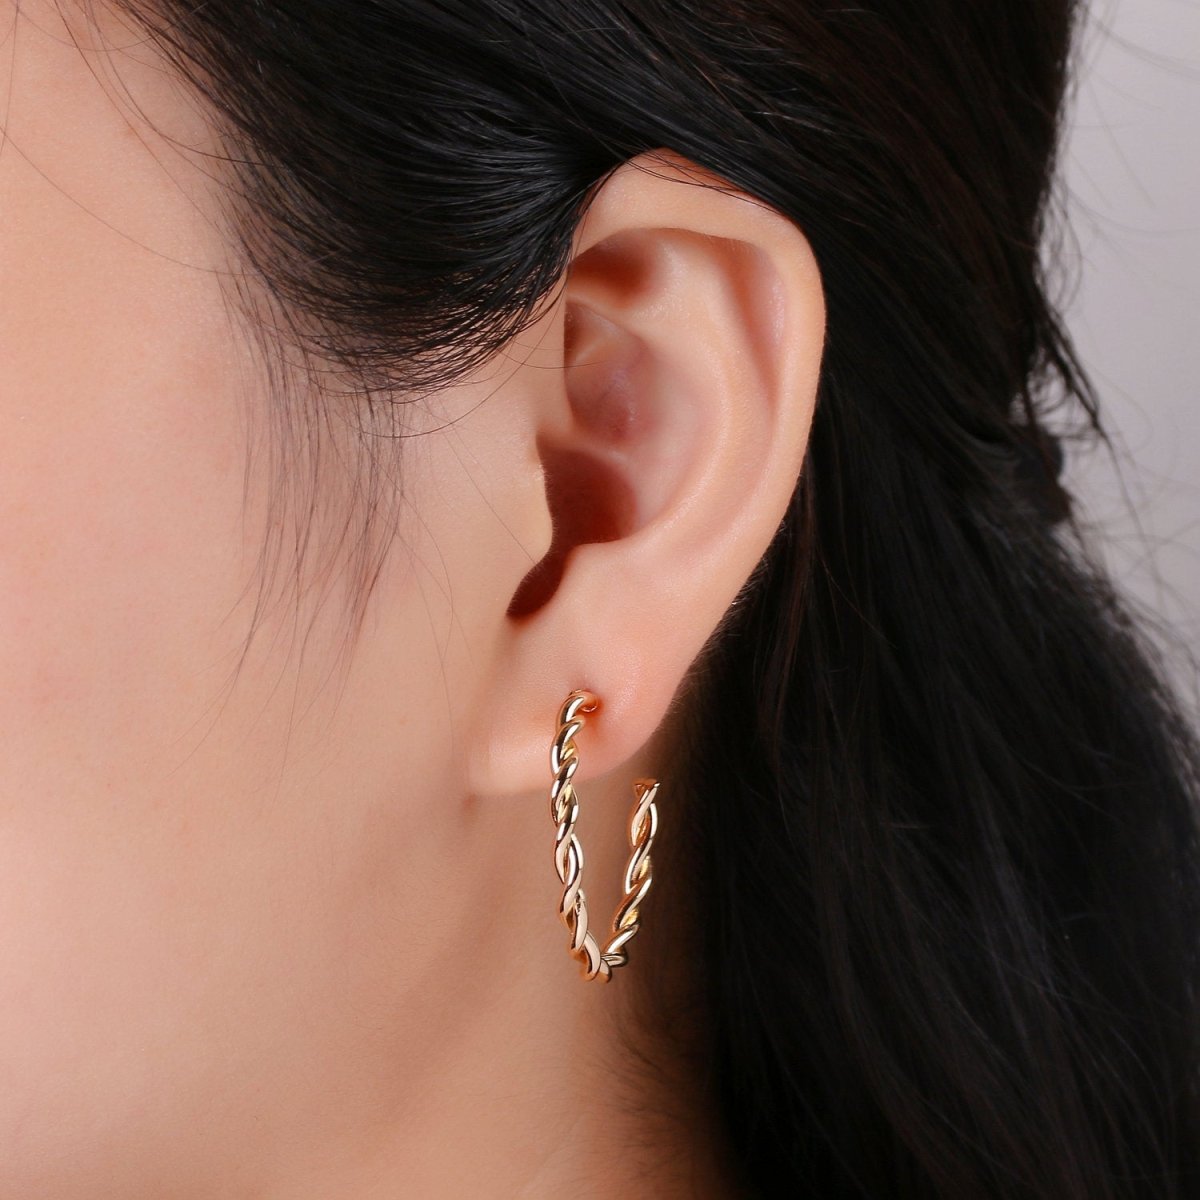 18k Gold Filled Twisted Rope Hoops,Swirl Twist Hoops, Twisted Hoops Gold, Gold Hoop Earrings, Minimalist Earrings, Boho Hoop Earrings Gift Q-092 - Q-094 - DLUXCA